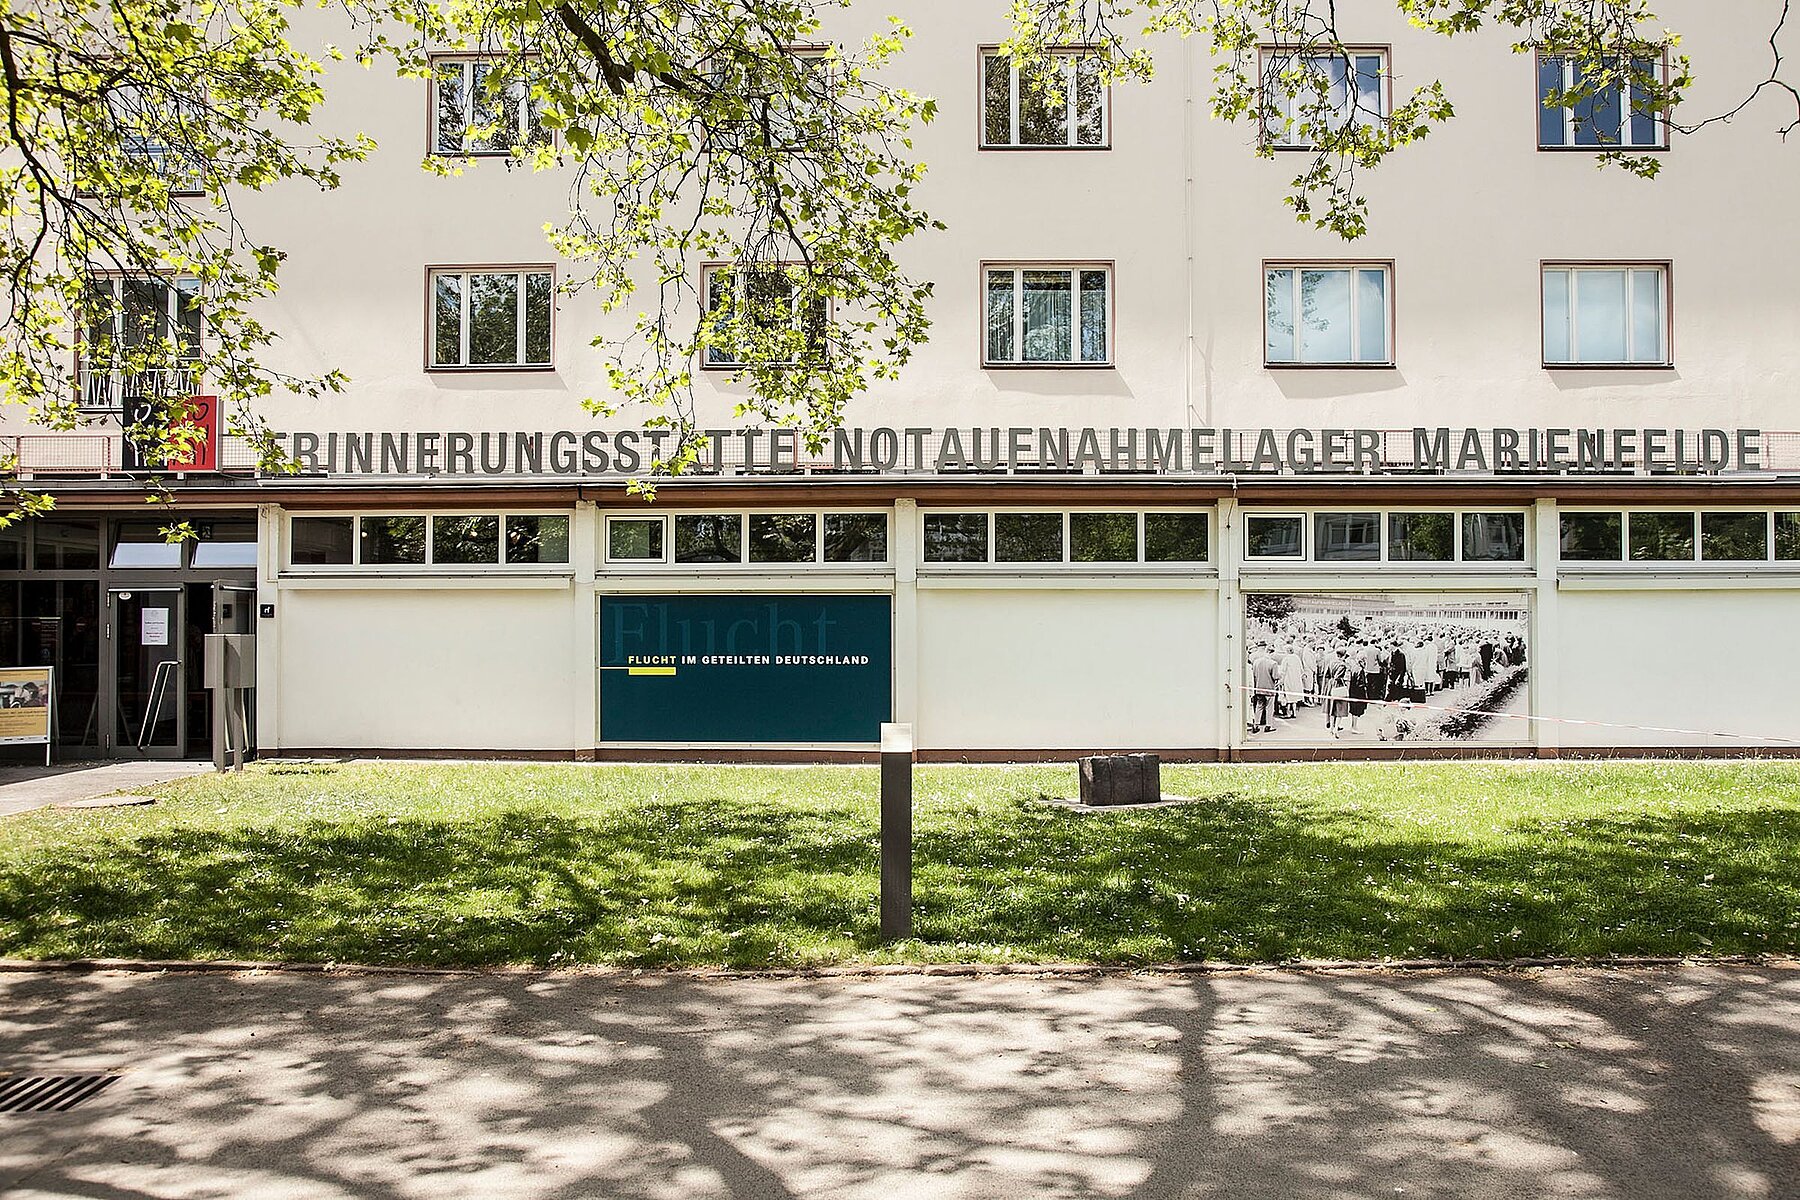 Front view of building with inscription Erinnerungsstätte Notaufnahmelager Marienfelde.